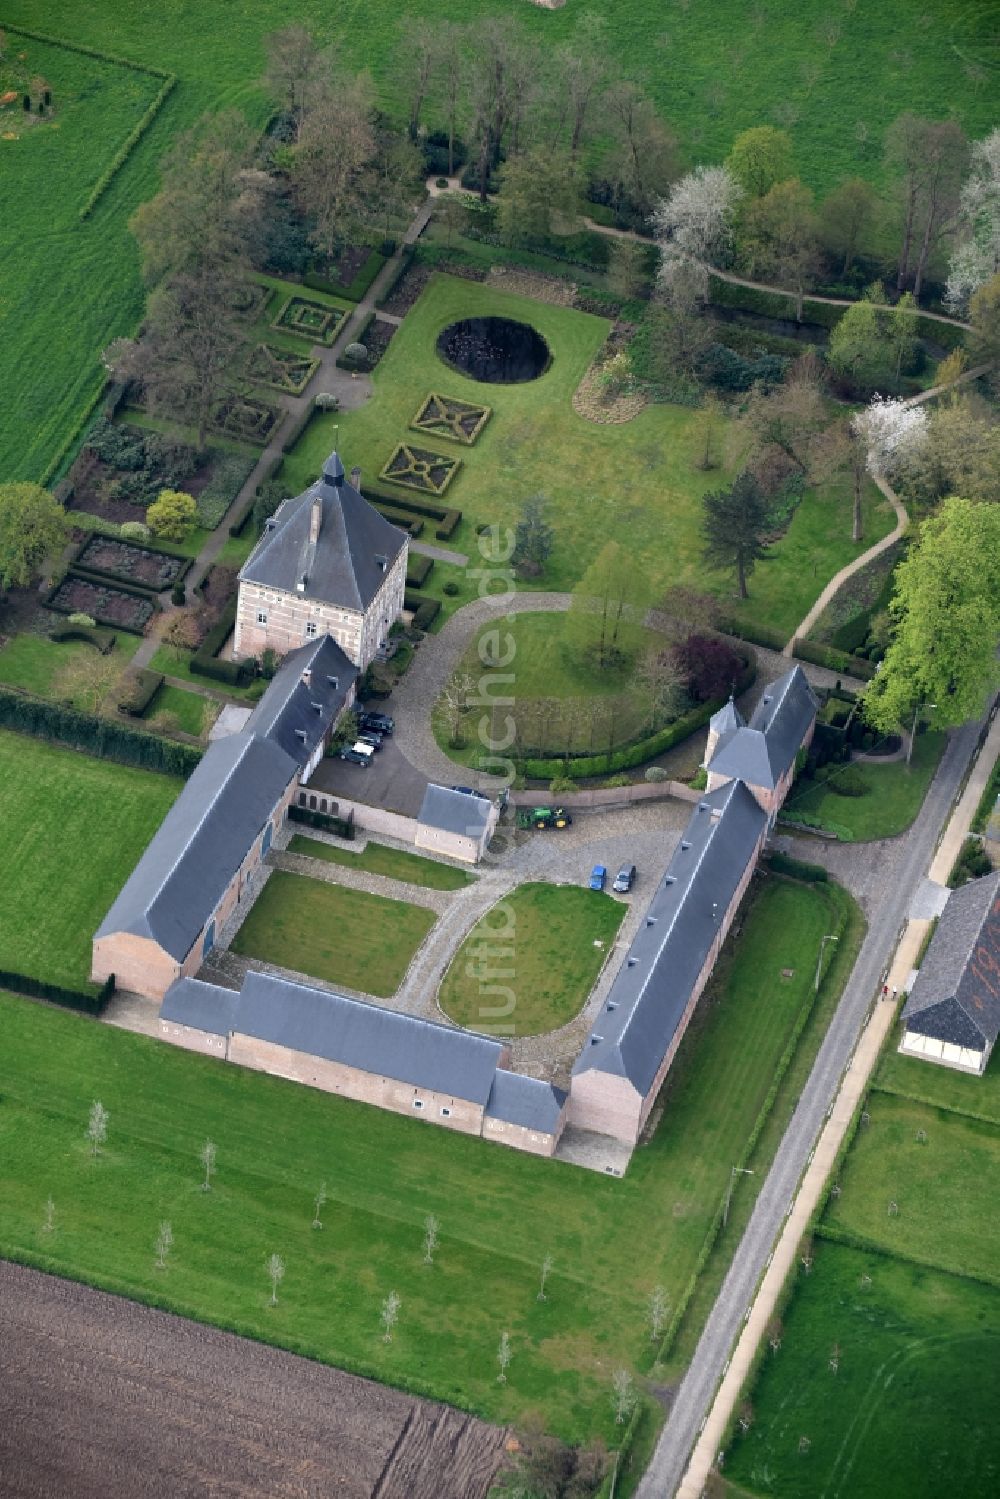 Kortessem von oben - Palais des Schloss am Printhagendreef in Kortessem in Vlaanderen, Belgien